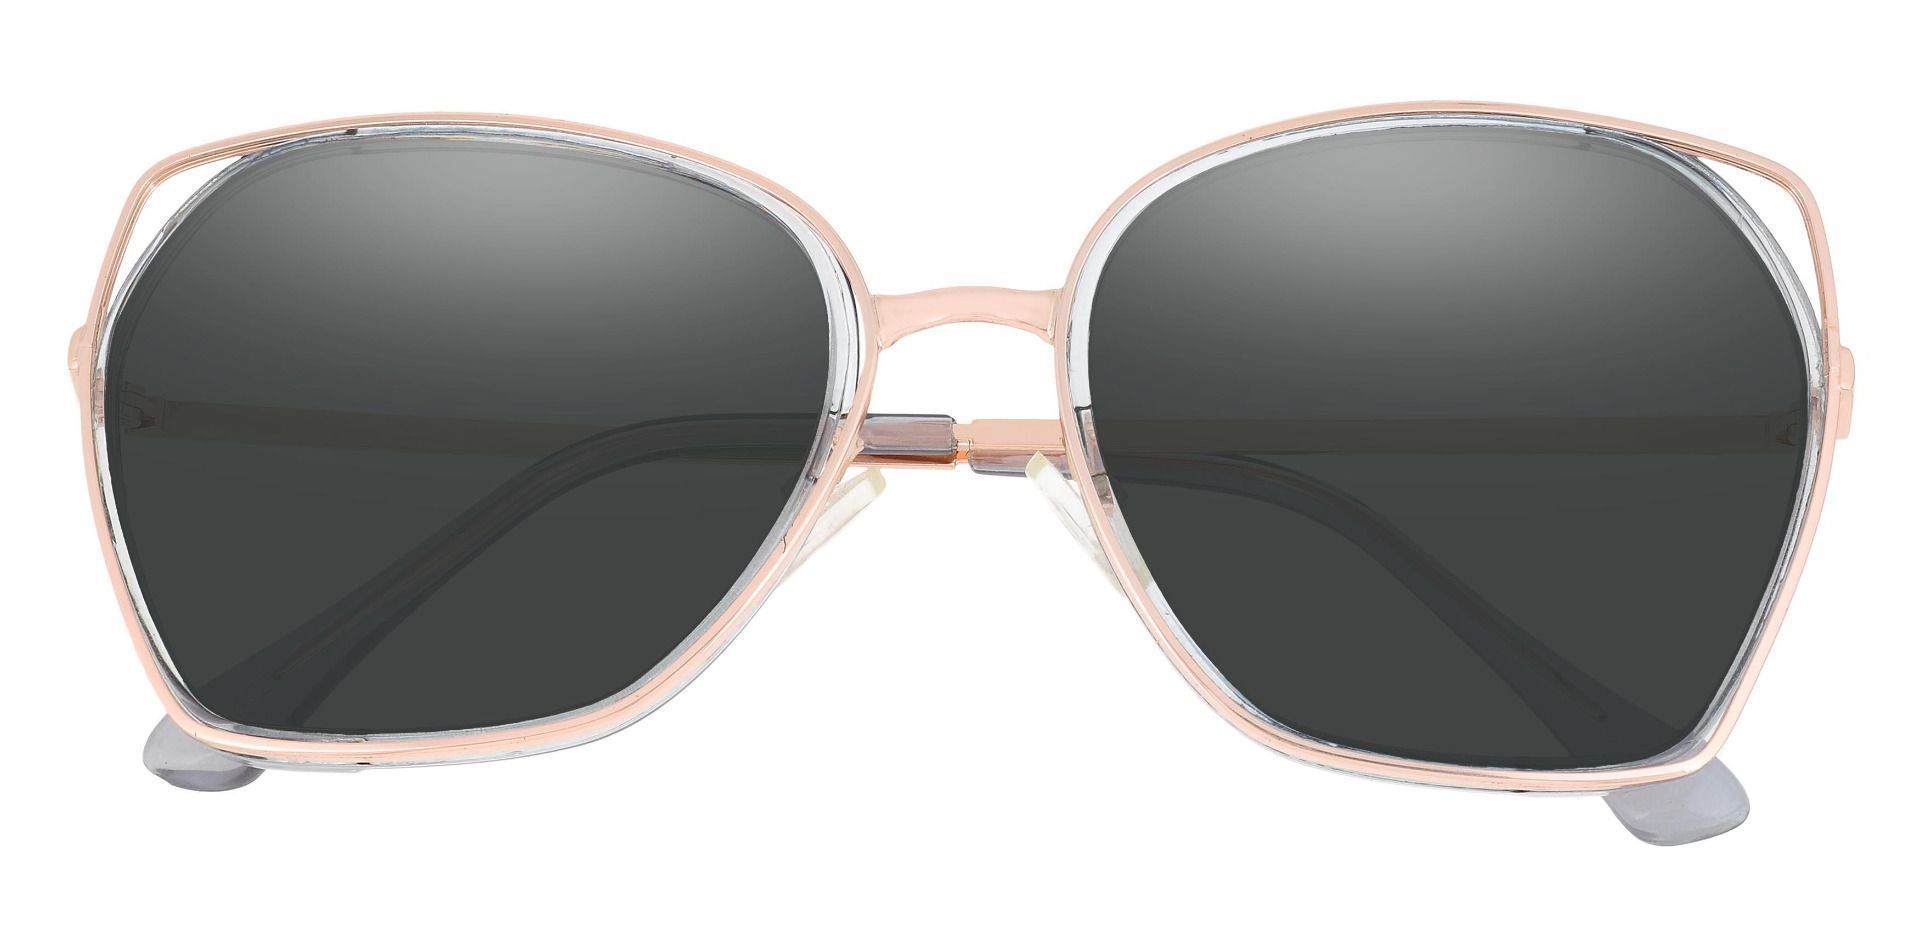 Tabby Geometric Reading Sunglasses - Blue Frame With Gray Lenses